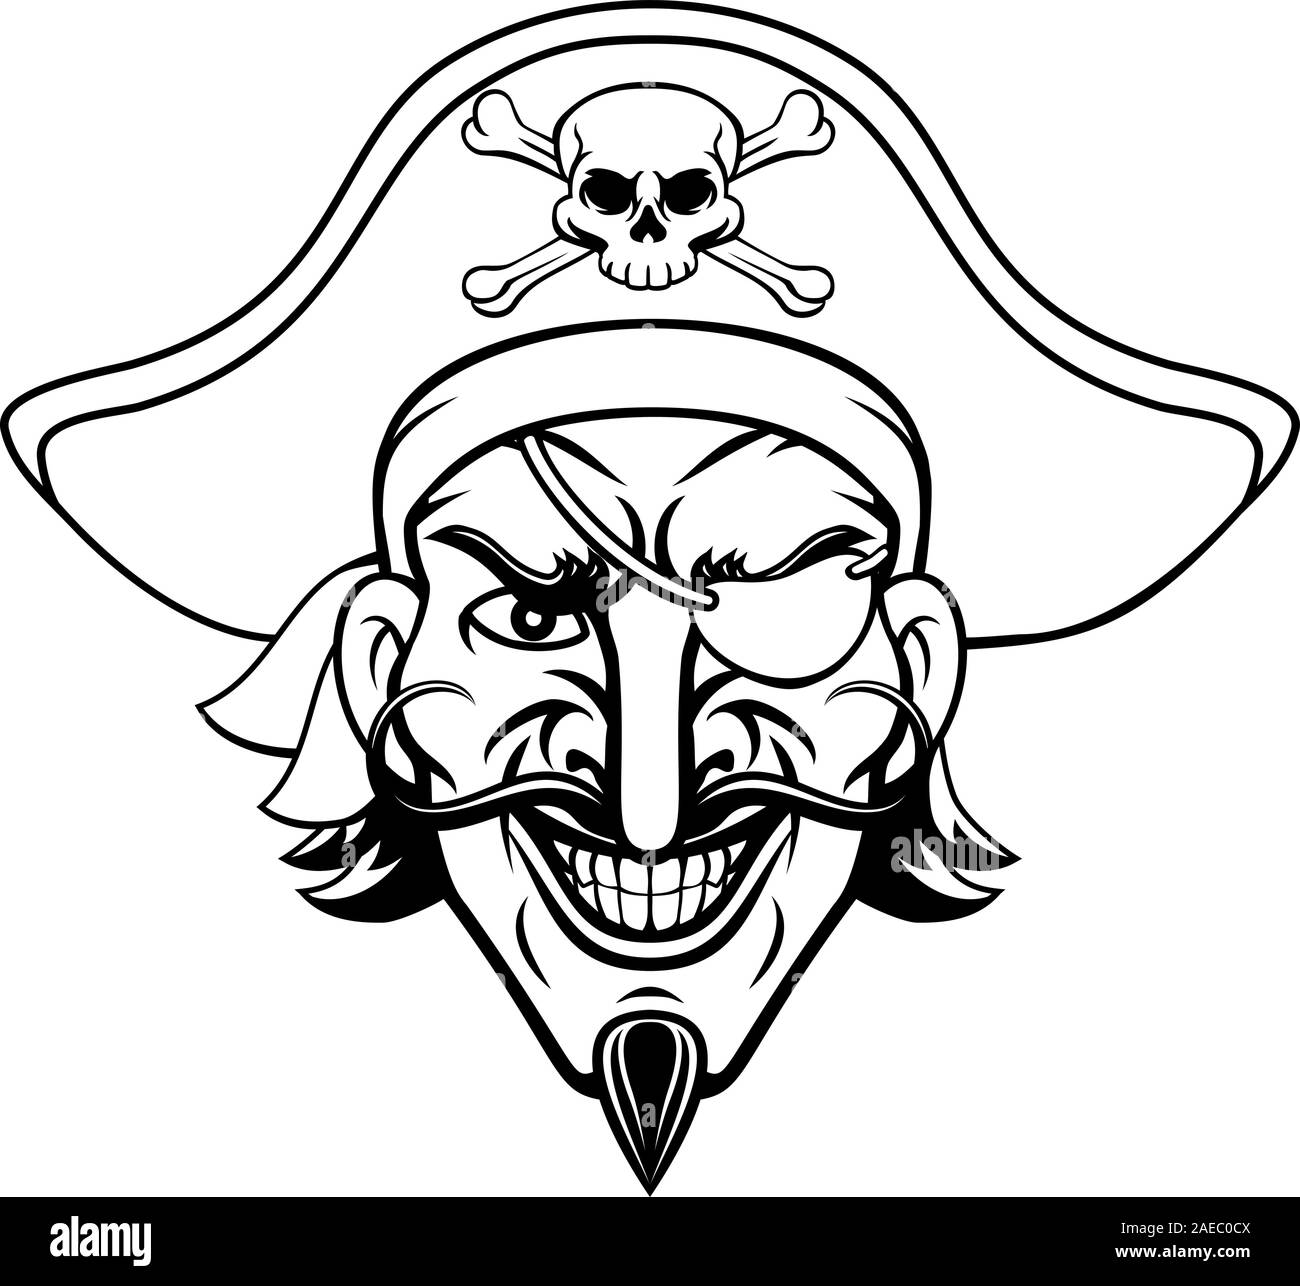 Pirate Captain Cartoon Character Mascot Stock Vector